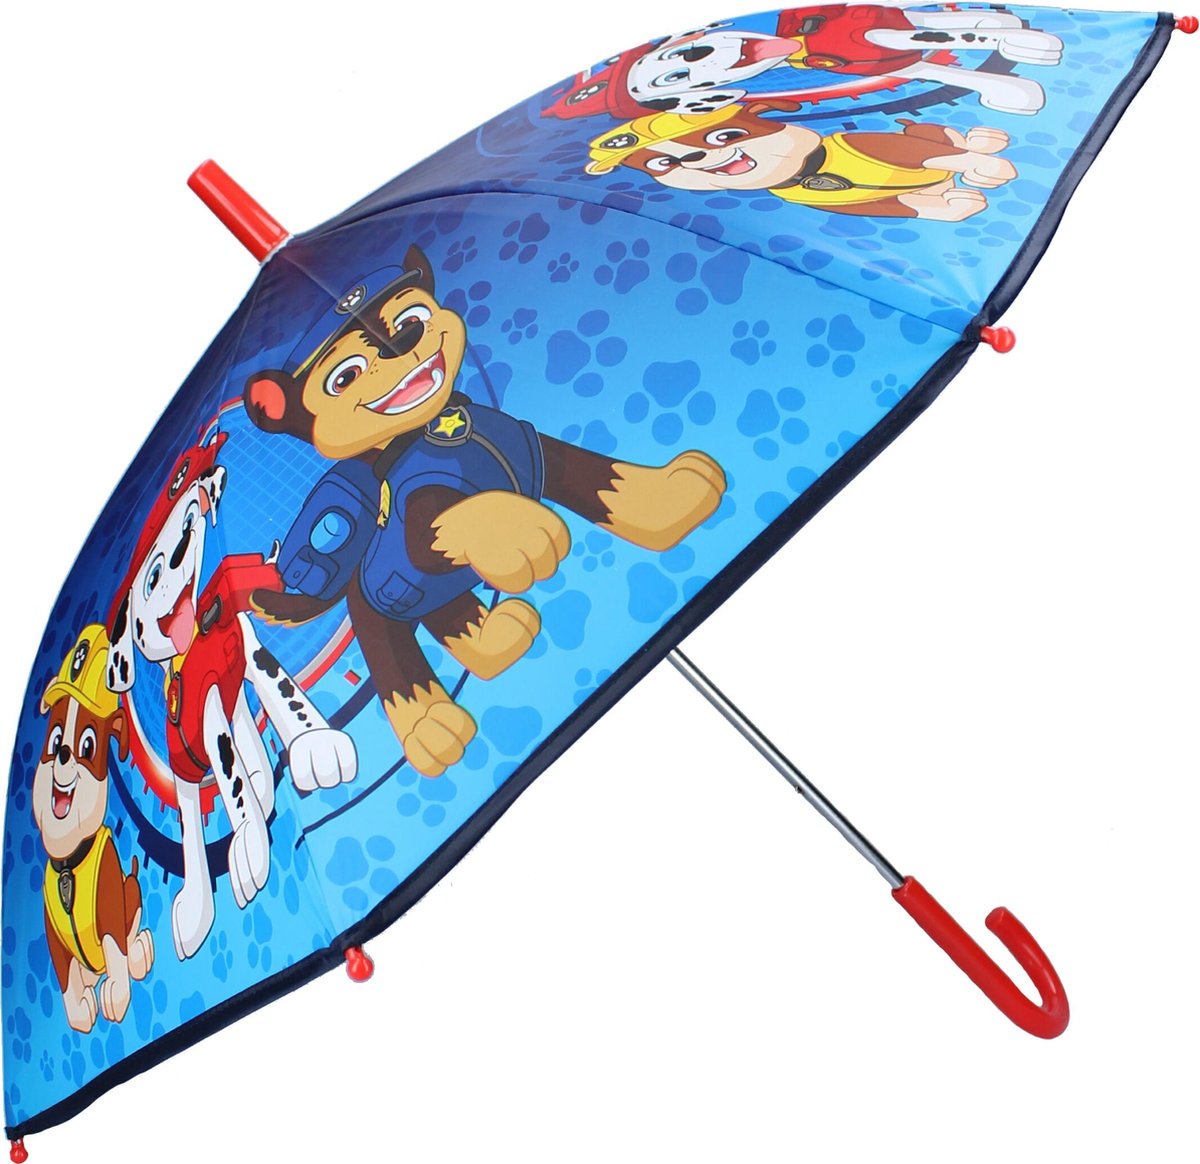 Paw Patrol kinderparaplu voor jongens/meisjes/kinderen 71 cm - Kinderparaplu - Regenkleding/regenaccessoires - PAW Patrol